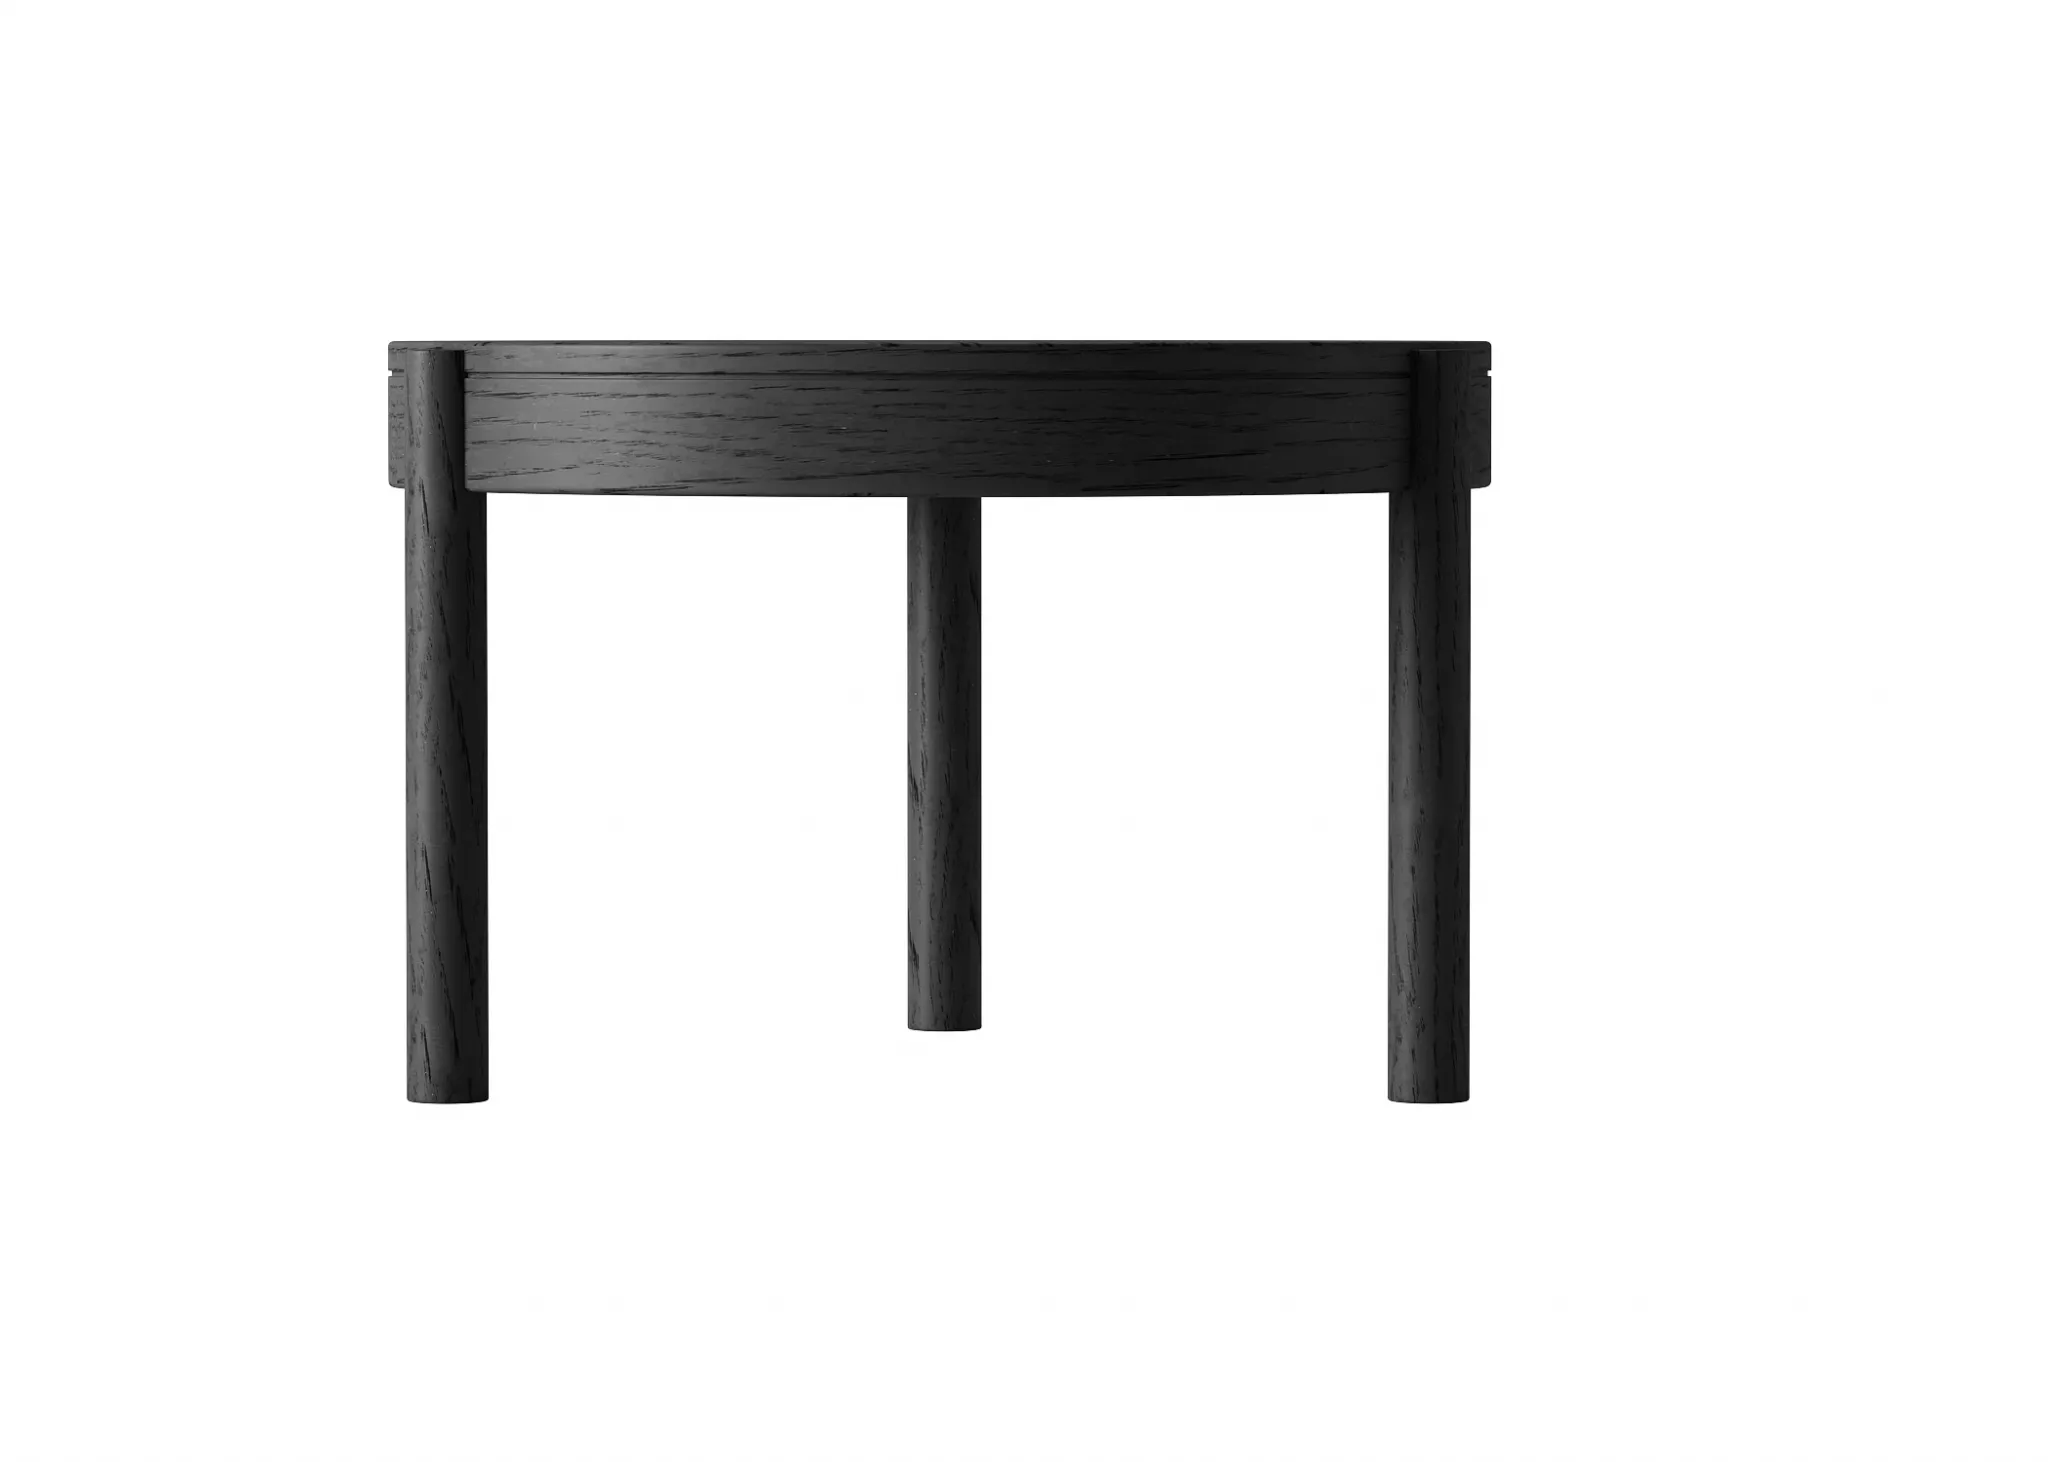 FURNITURE 3D MODELS – TABLES – 0070